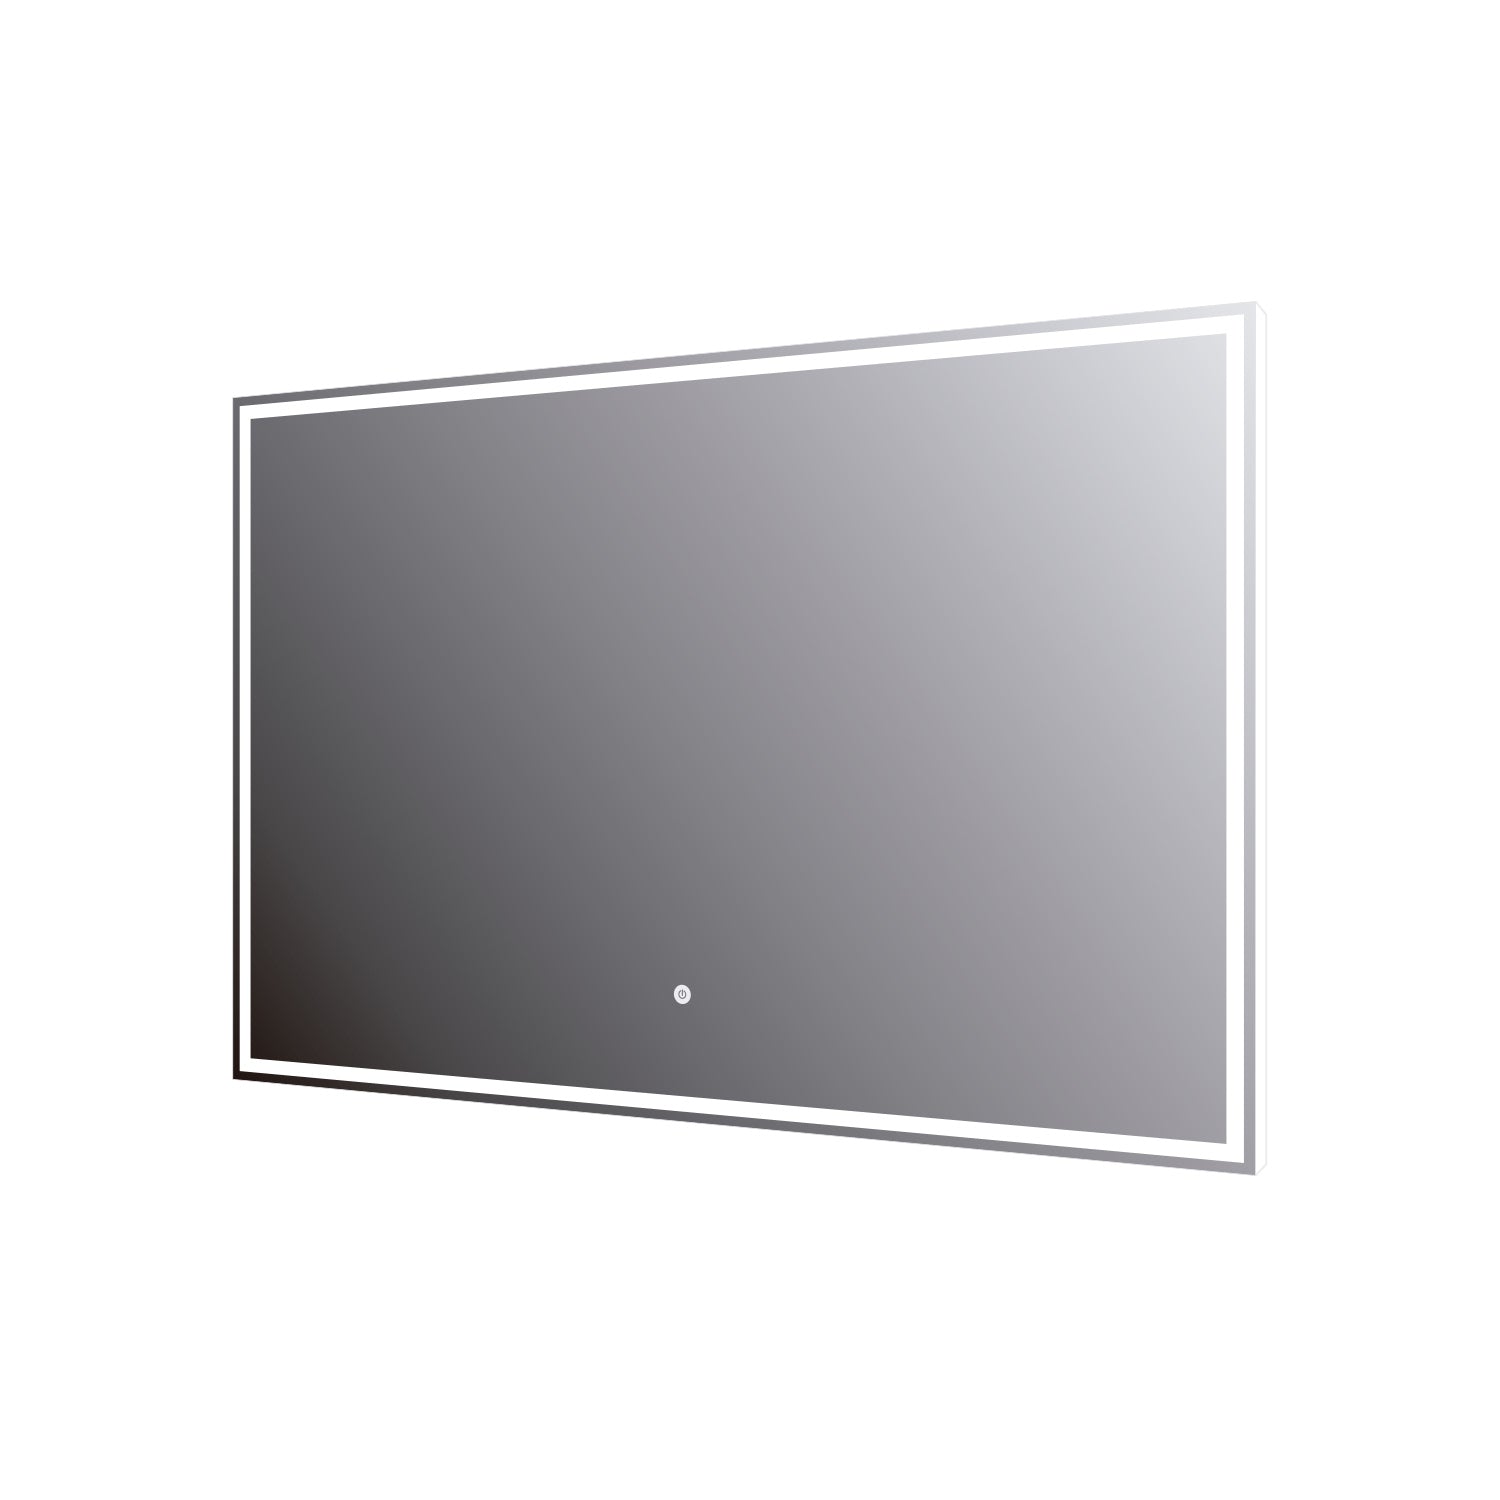 36" DAX LED Backlit Bathroom Vanity Mirror with Touch Sensor, 110 V, 50-60Hz, 35-7/16 x 23-5/8 x 12 5/8 Inches (DAX-DL759060)